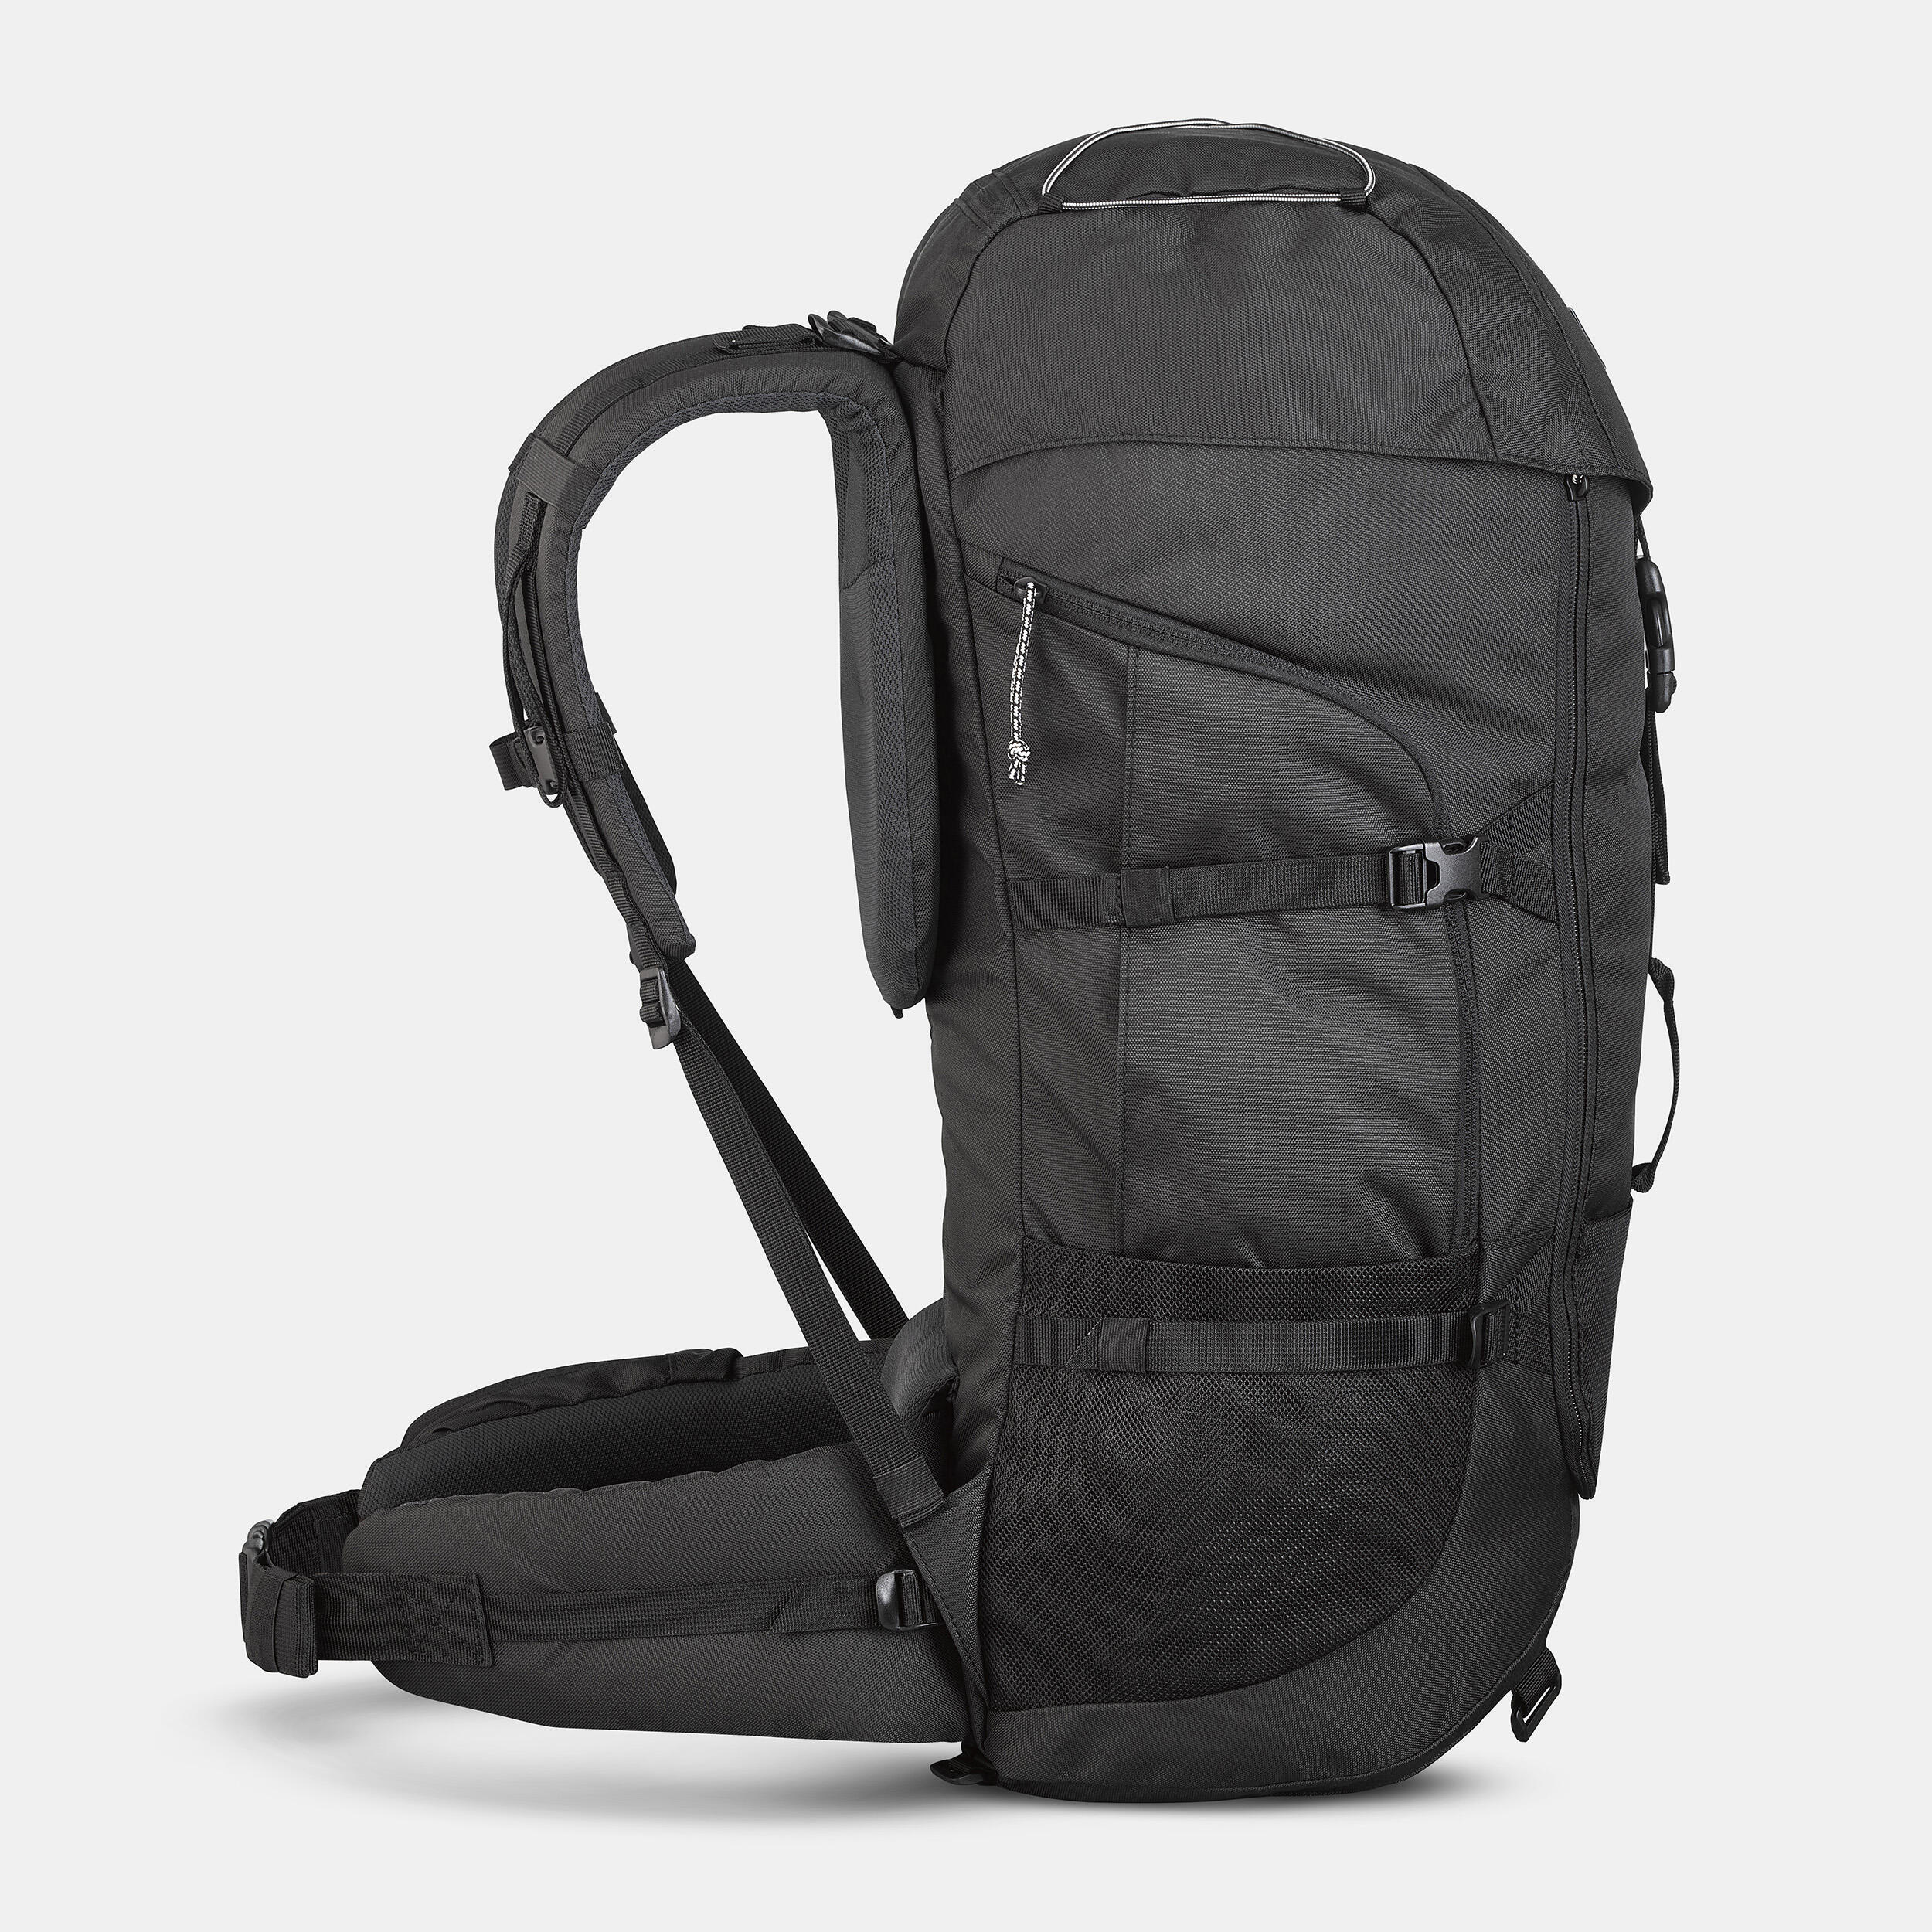 Travel backpack 50L - Travel 100 5/20